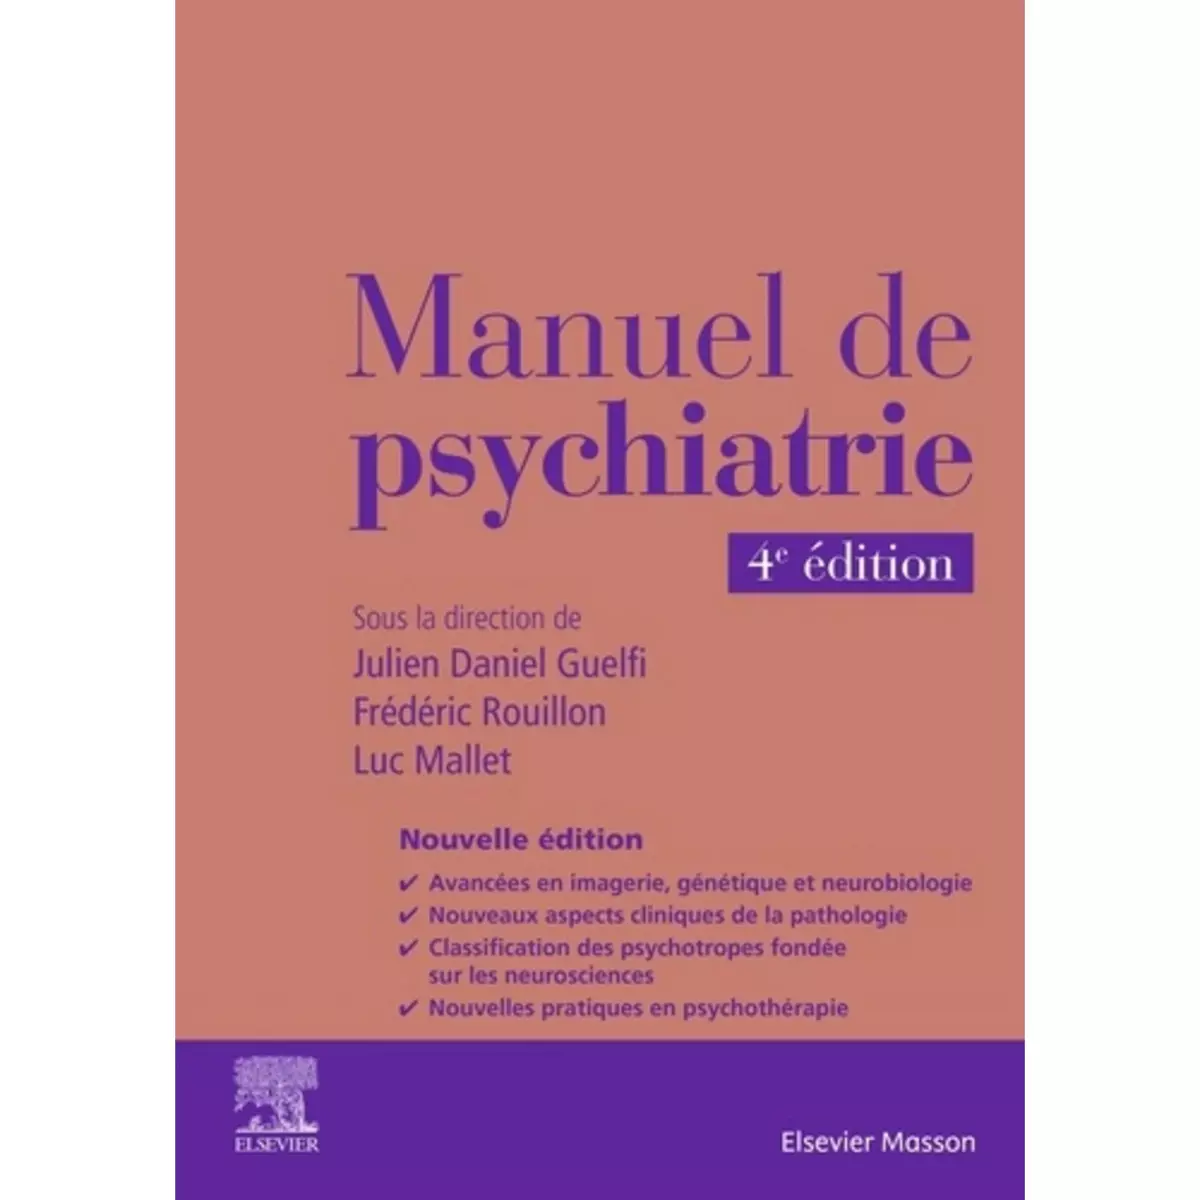  MANUEL DE PSYCHIATRIE. 4E EDITION, Guelfi Julien Daniel